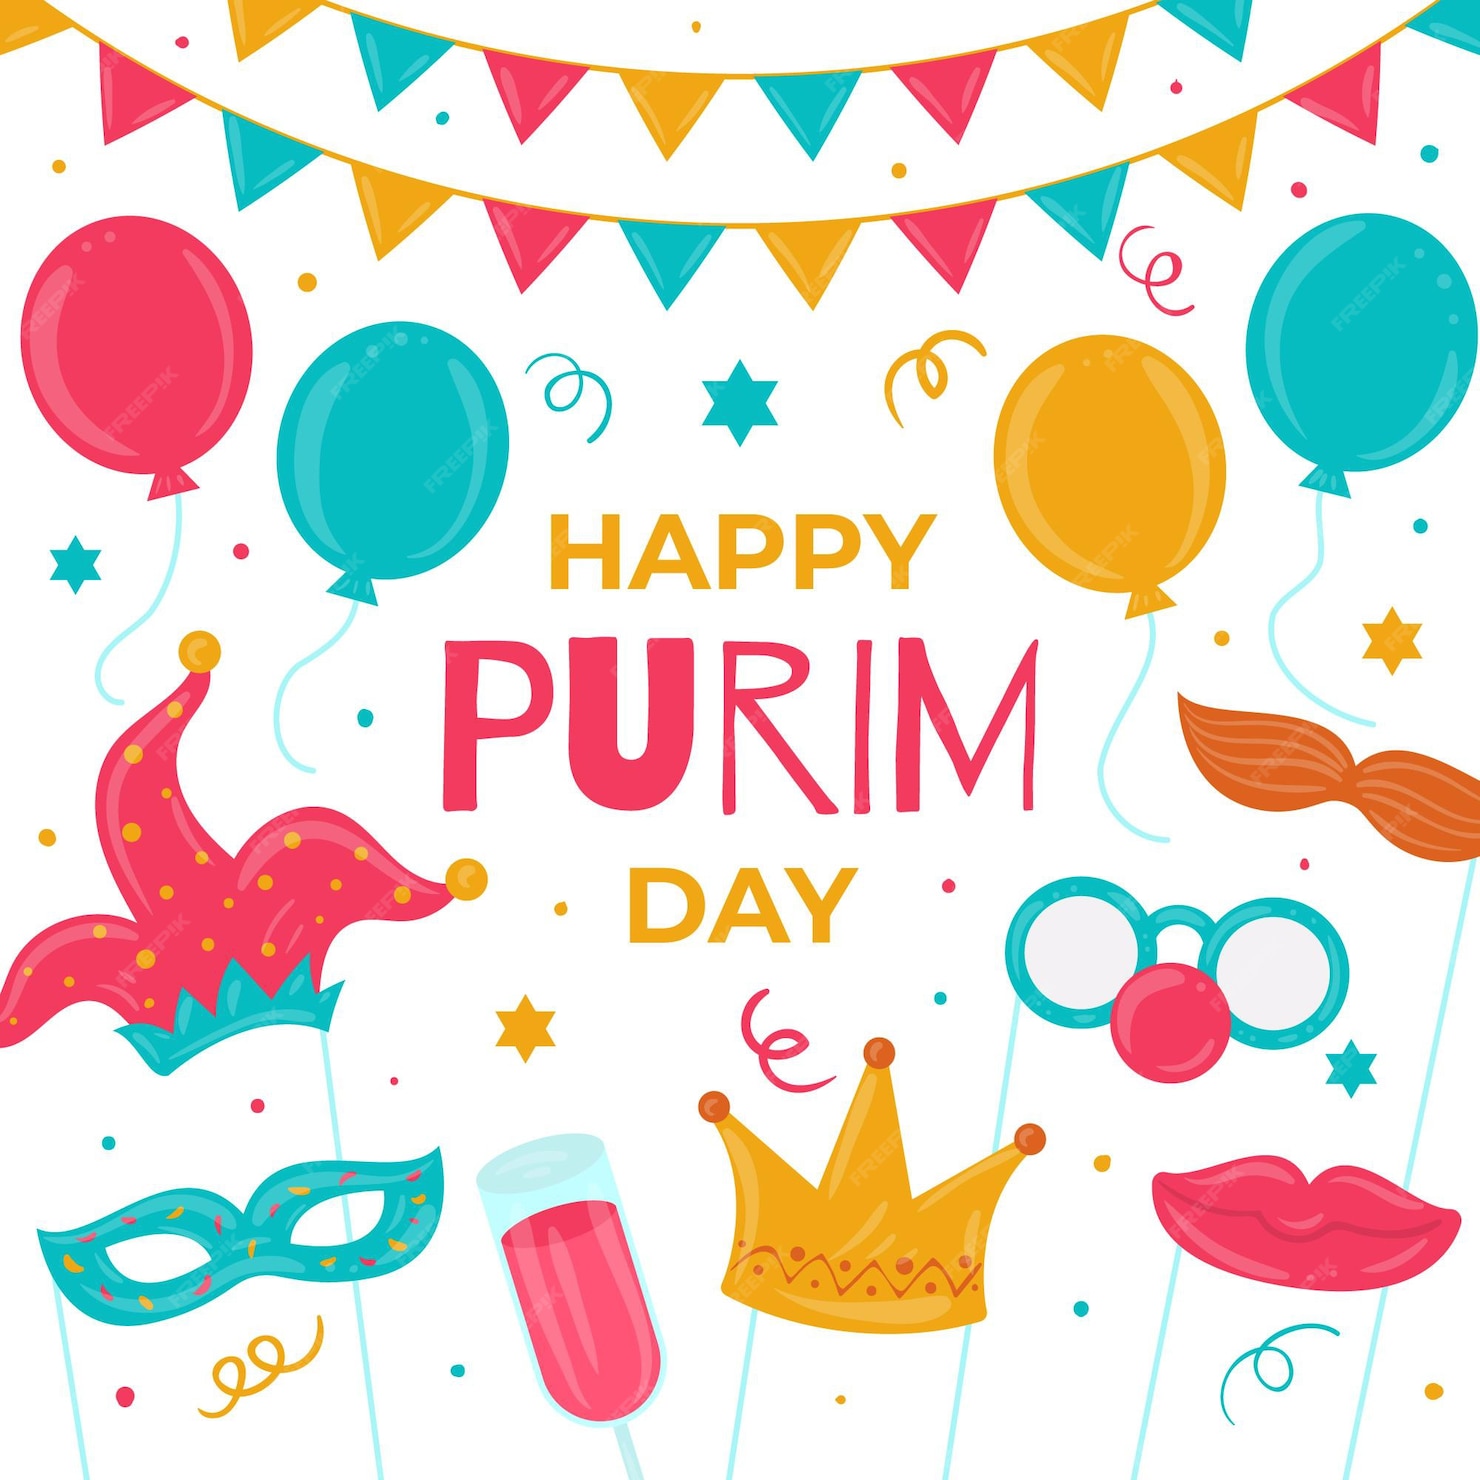 Free Vector Hand drawn happy purim day